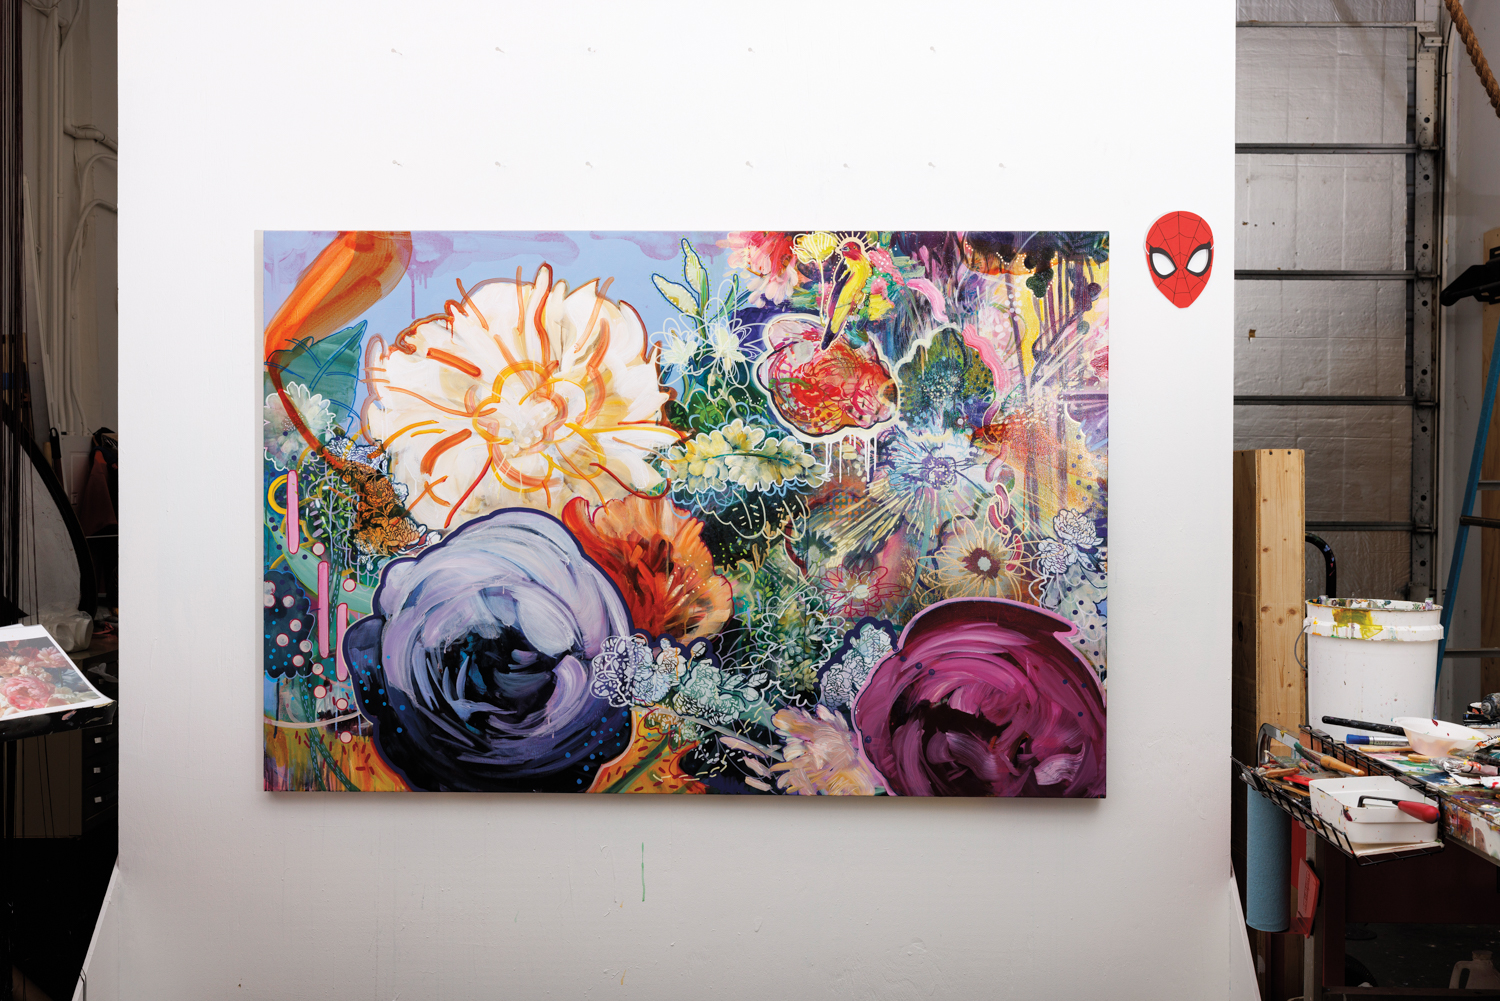 flower portrait by carmelo blandino hanging on his studio wall